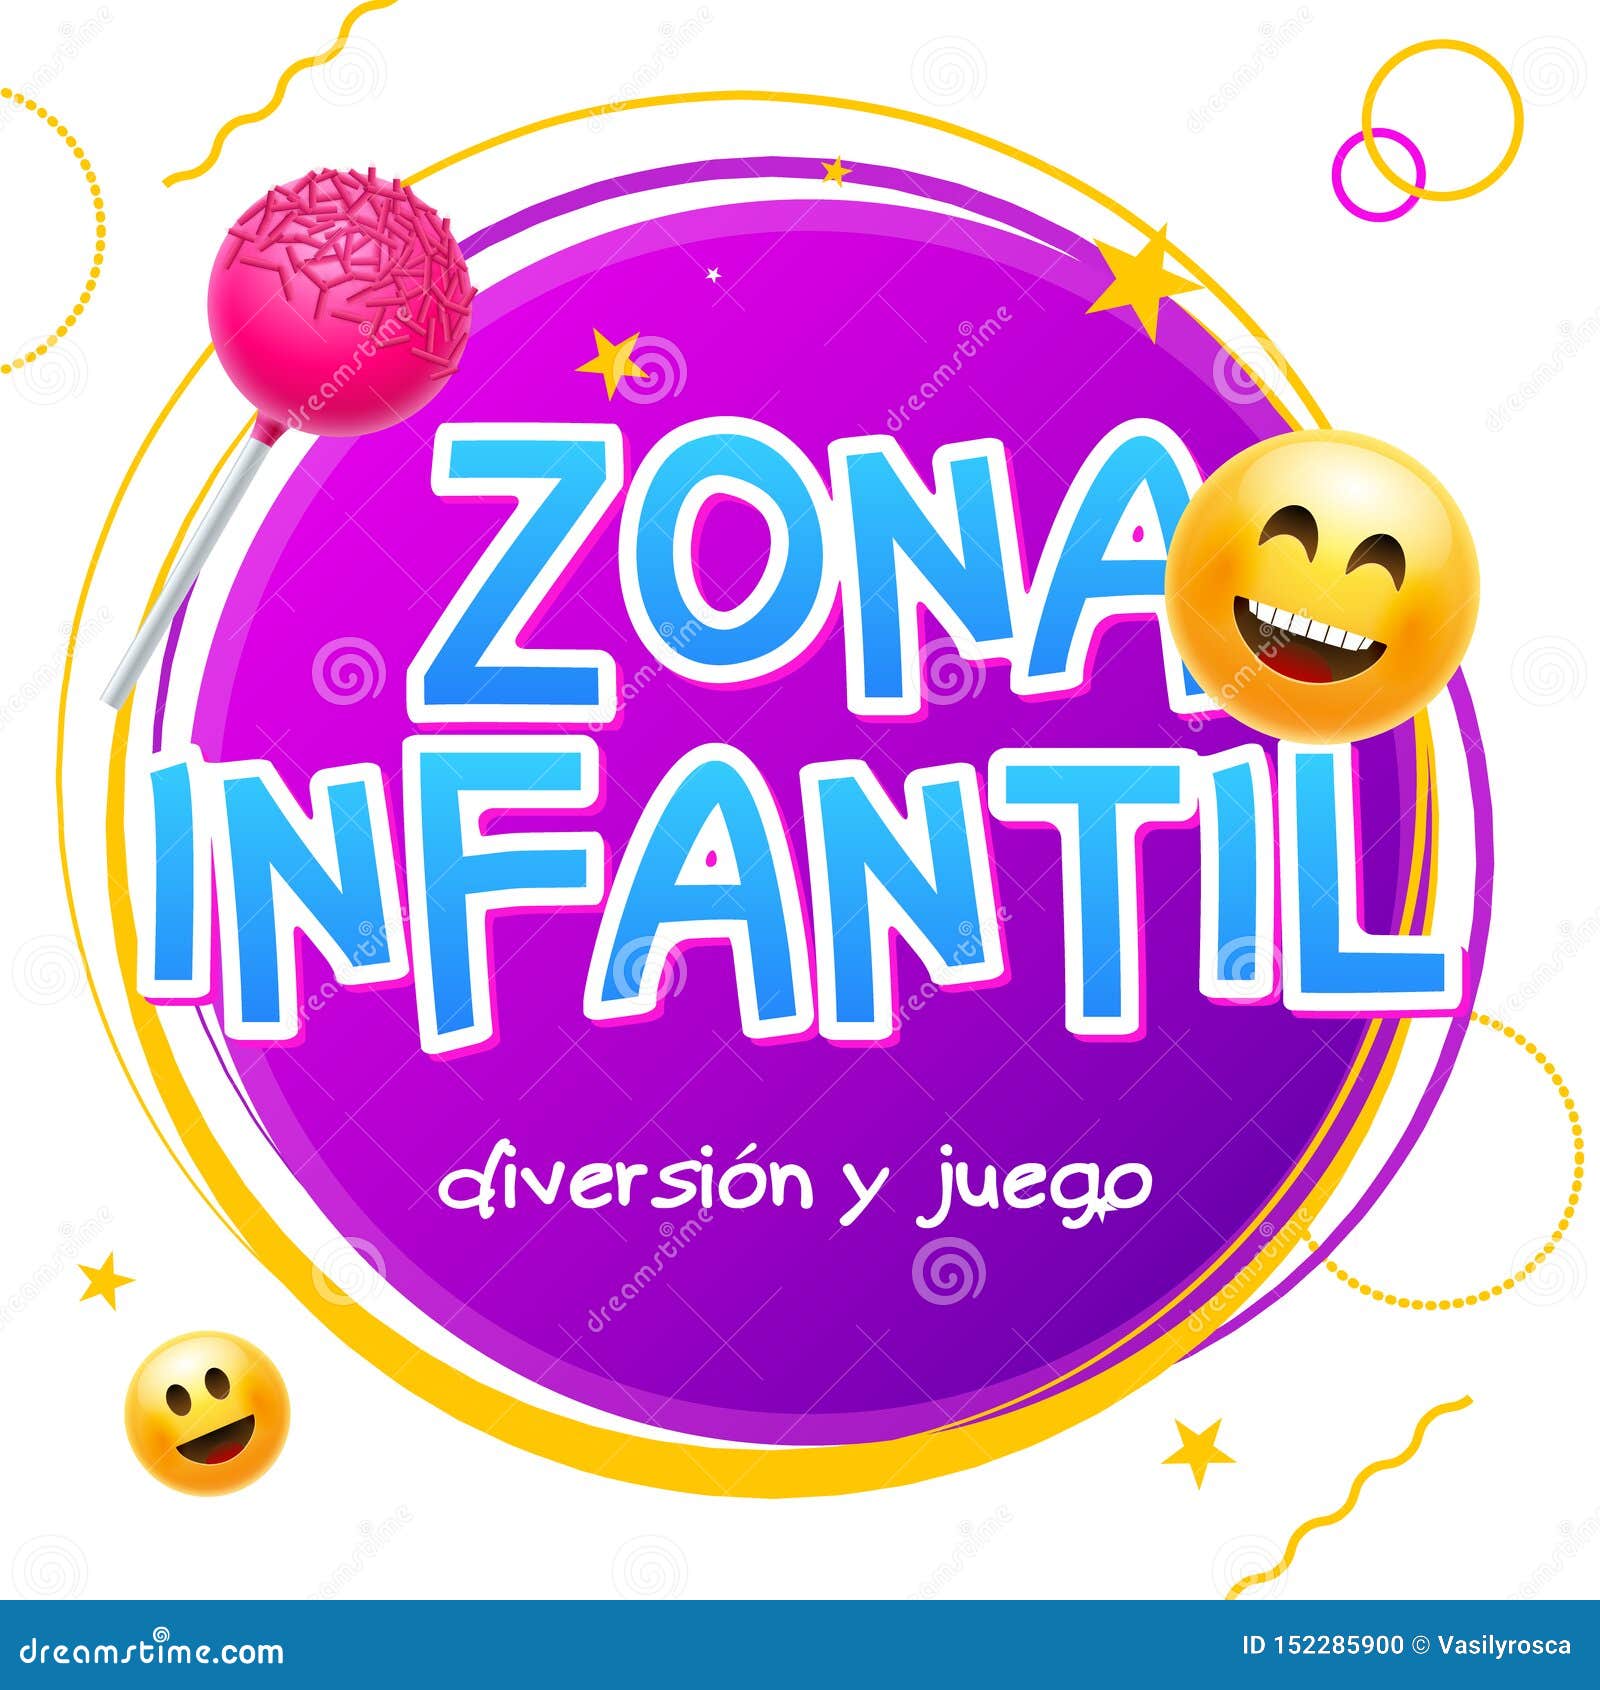 kids zone game banner  background zona infantil. playground  child zone sign in spanish